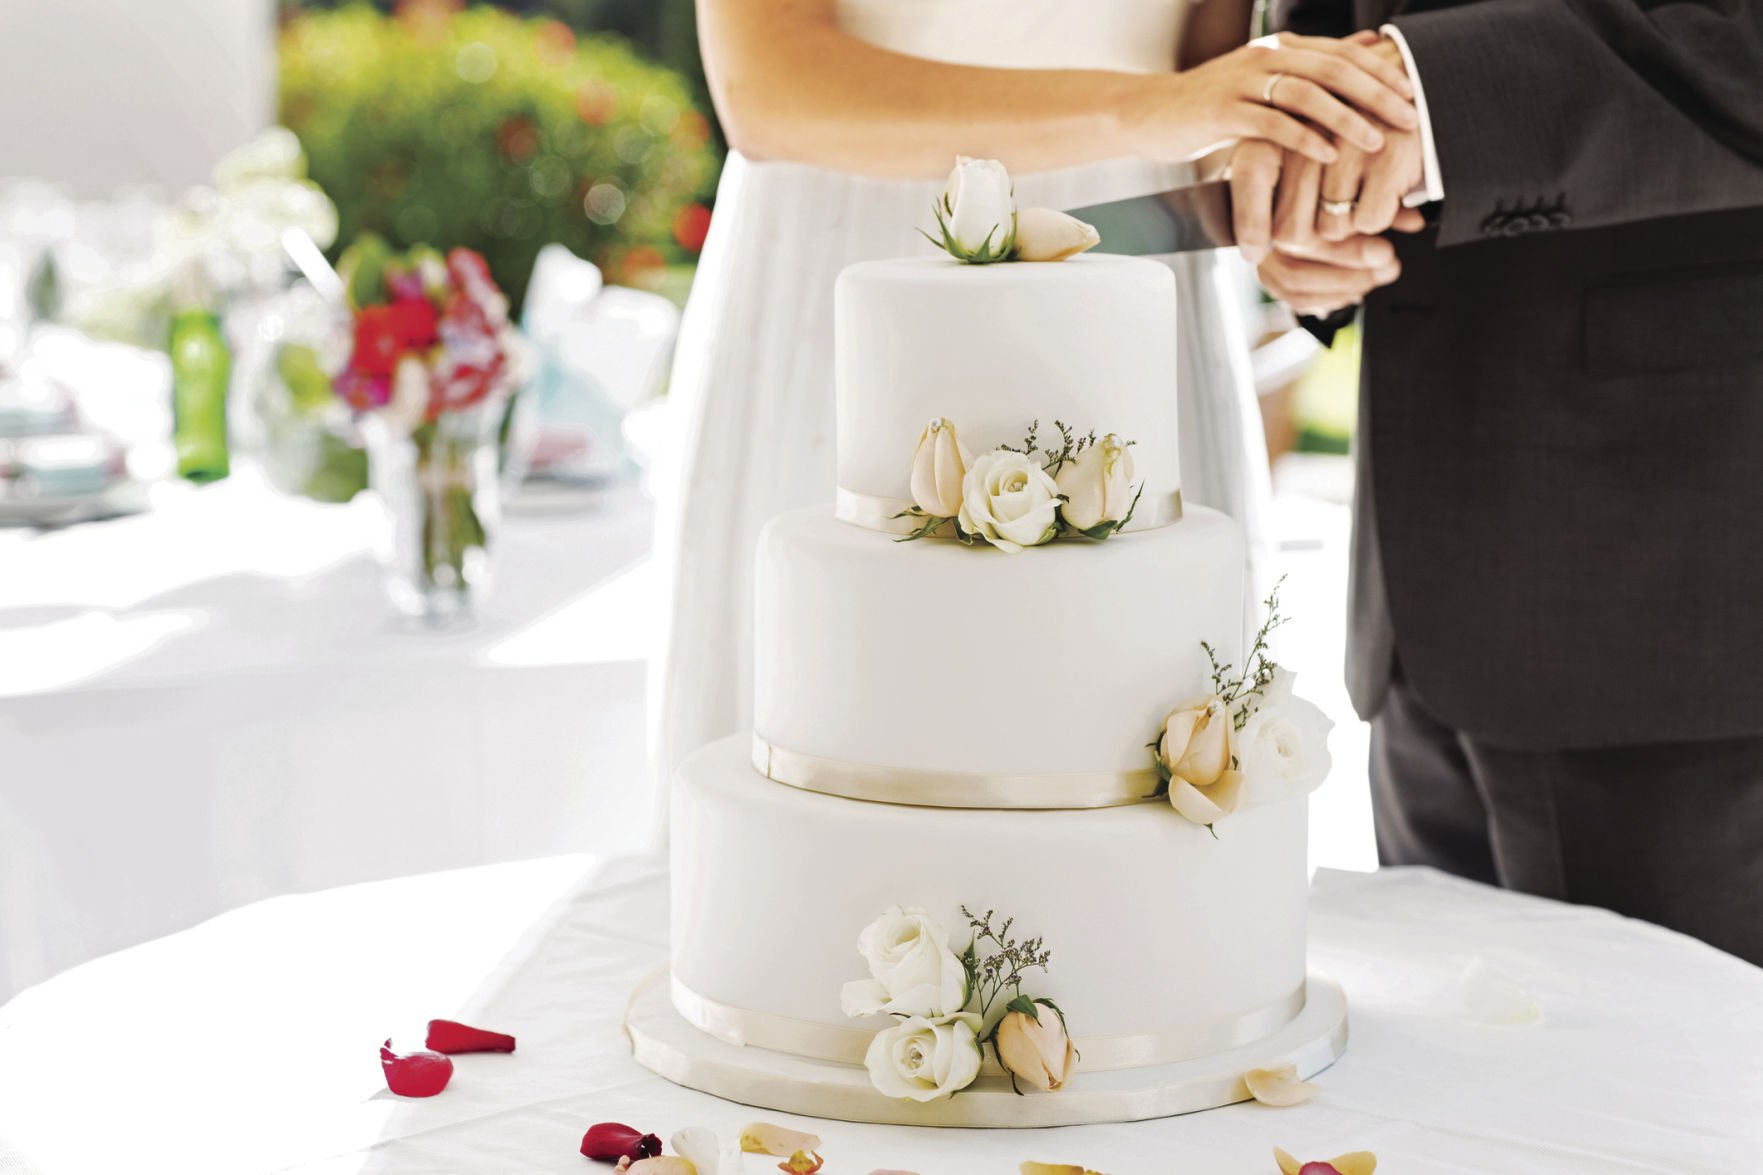 Wedding Cake v2 | RE-UP SUPPLY CO.